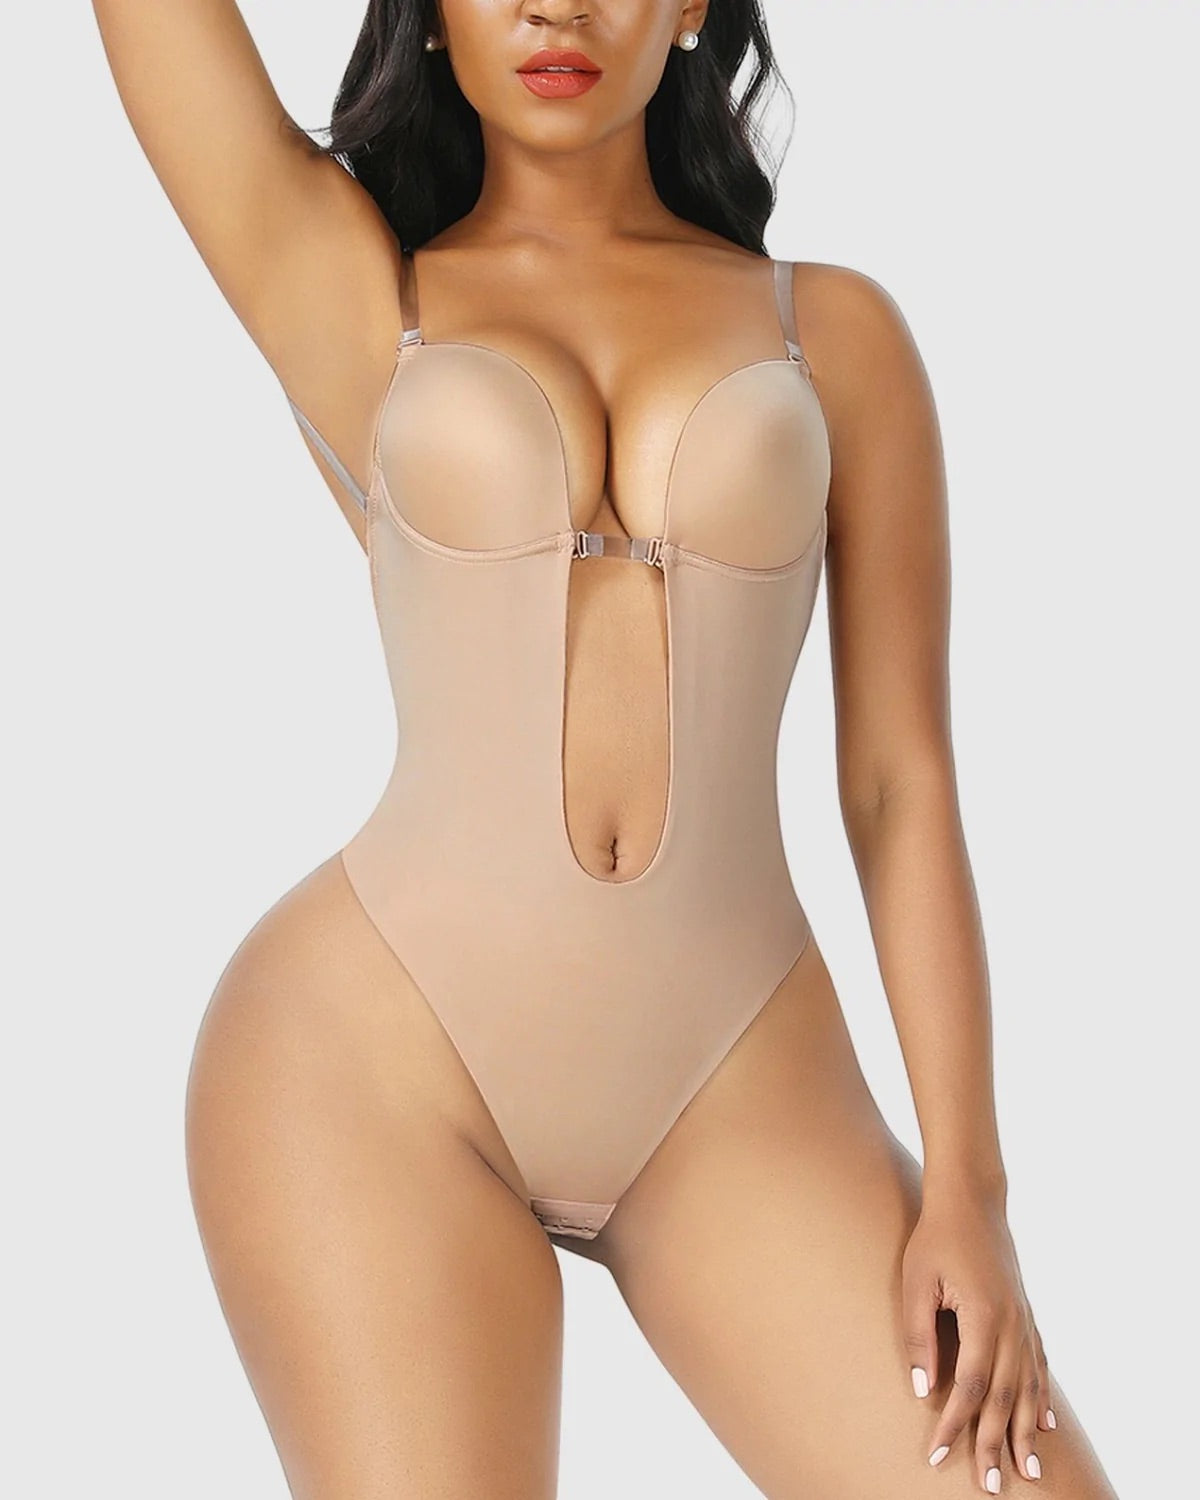 Plunge backless body shaper bra,deep v bra sexy Sri Lanka